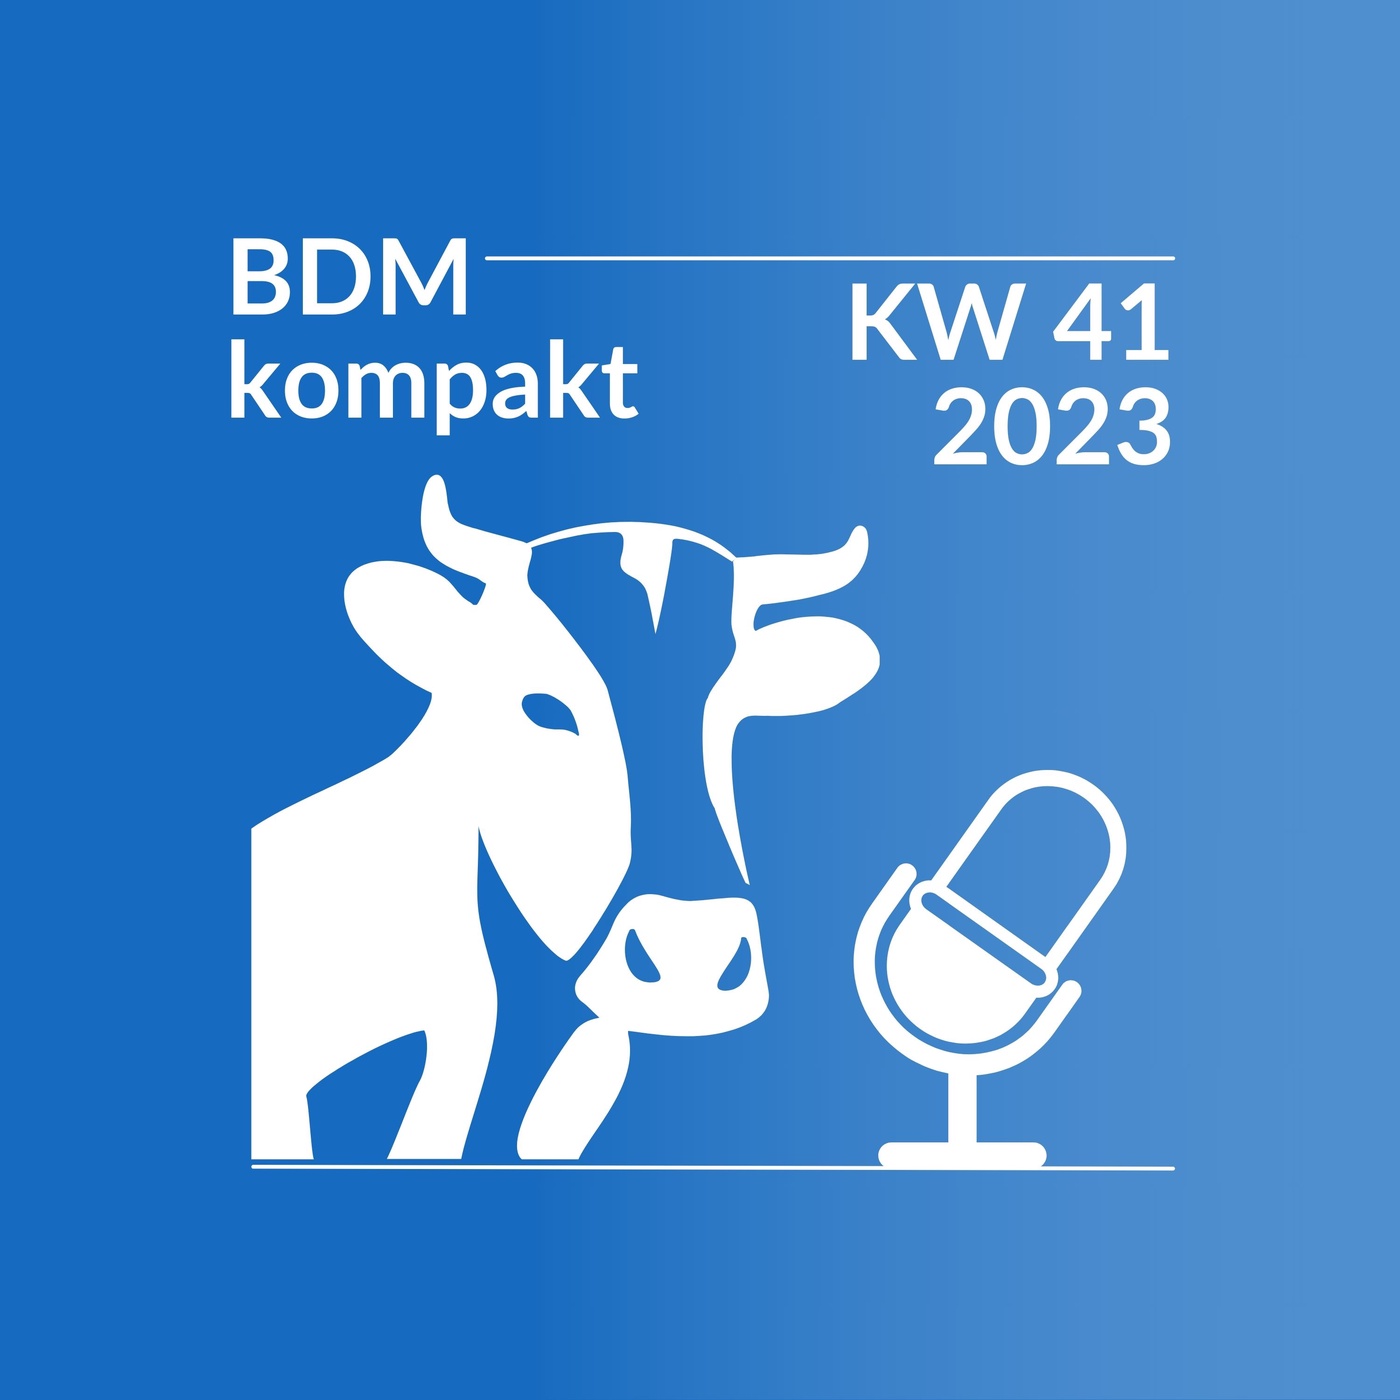 BDM kompakt KW 41/2023